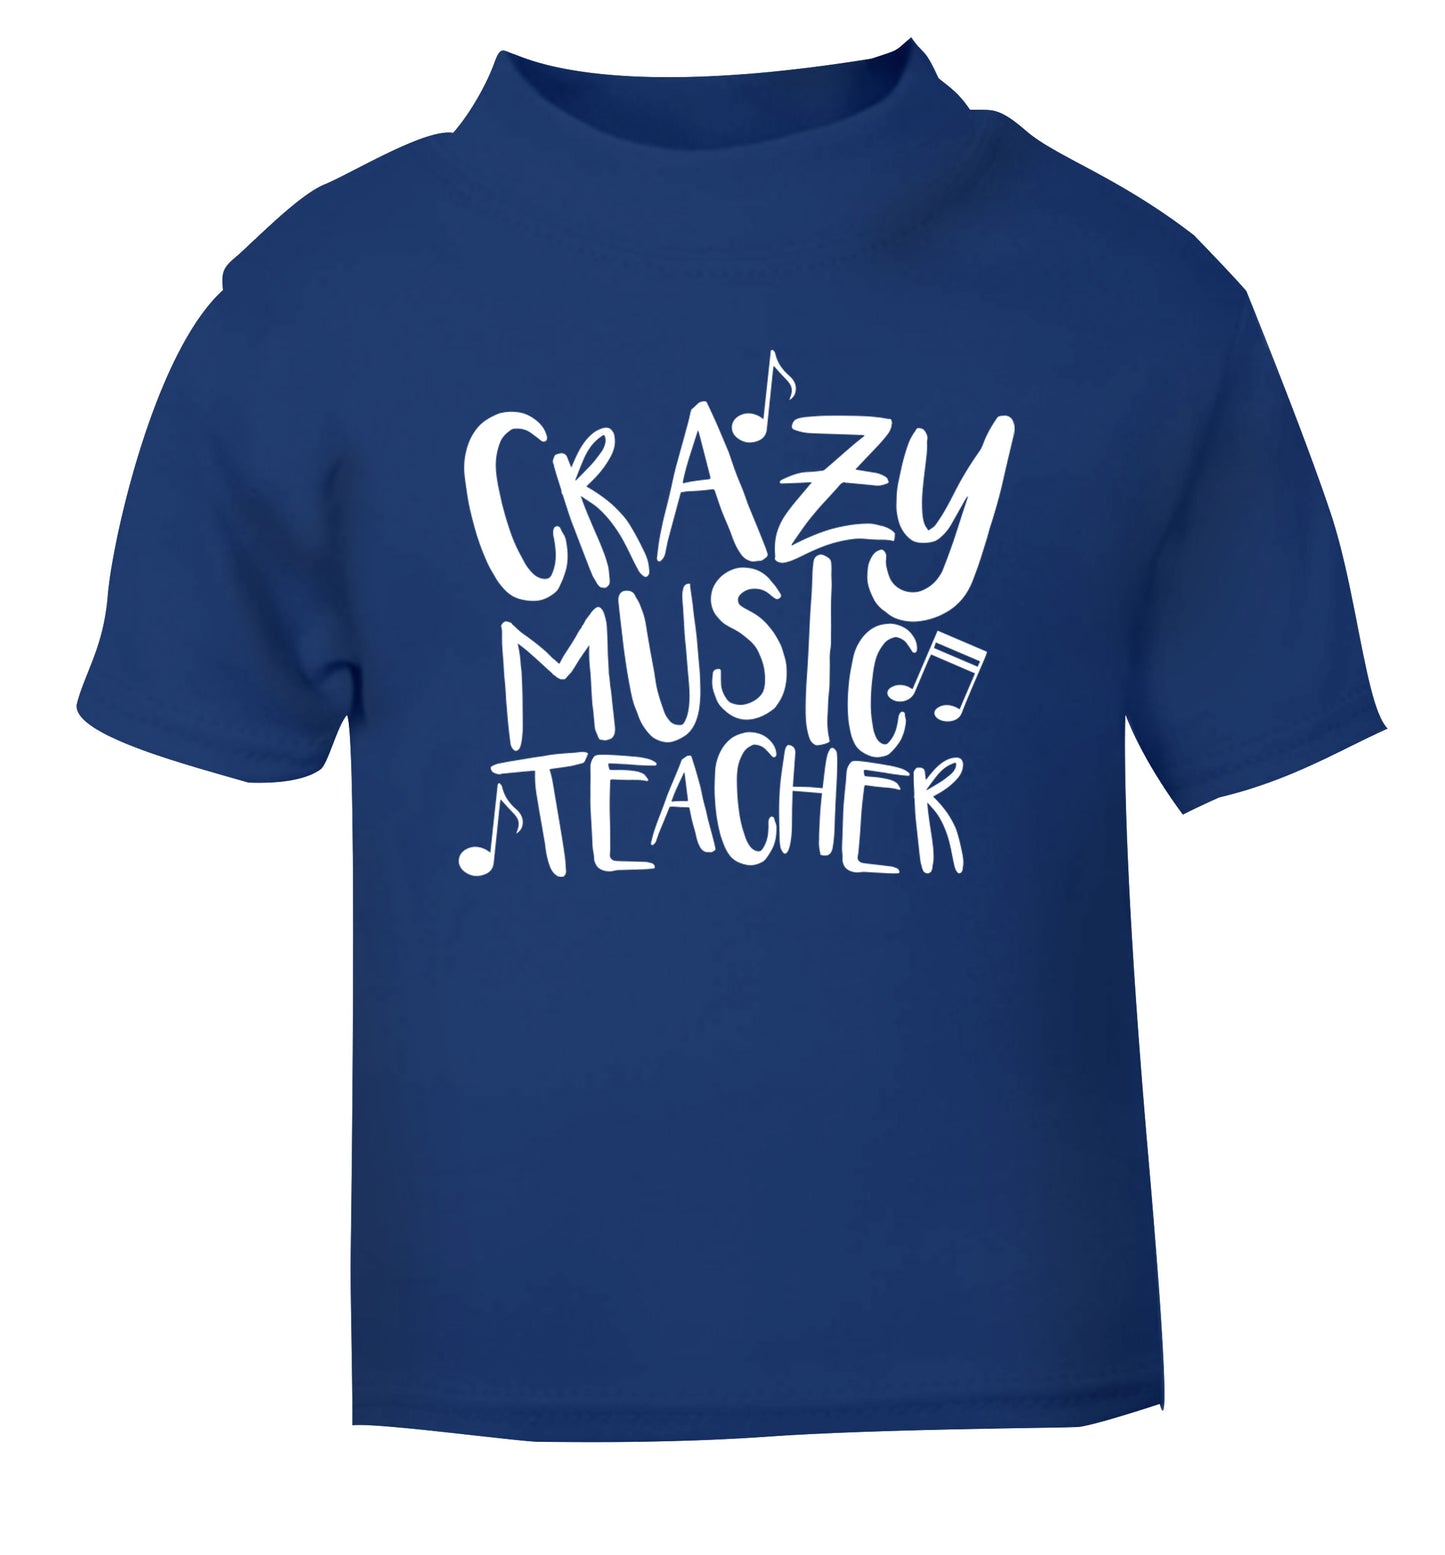 Crazy music teacher blue Baby Toddler Tshirt 2 Years